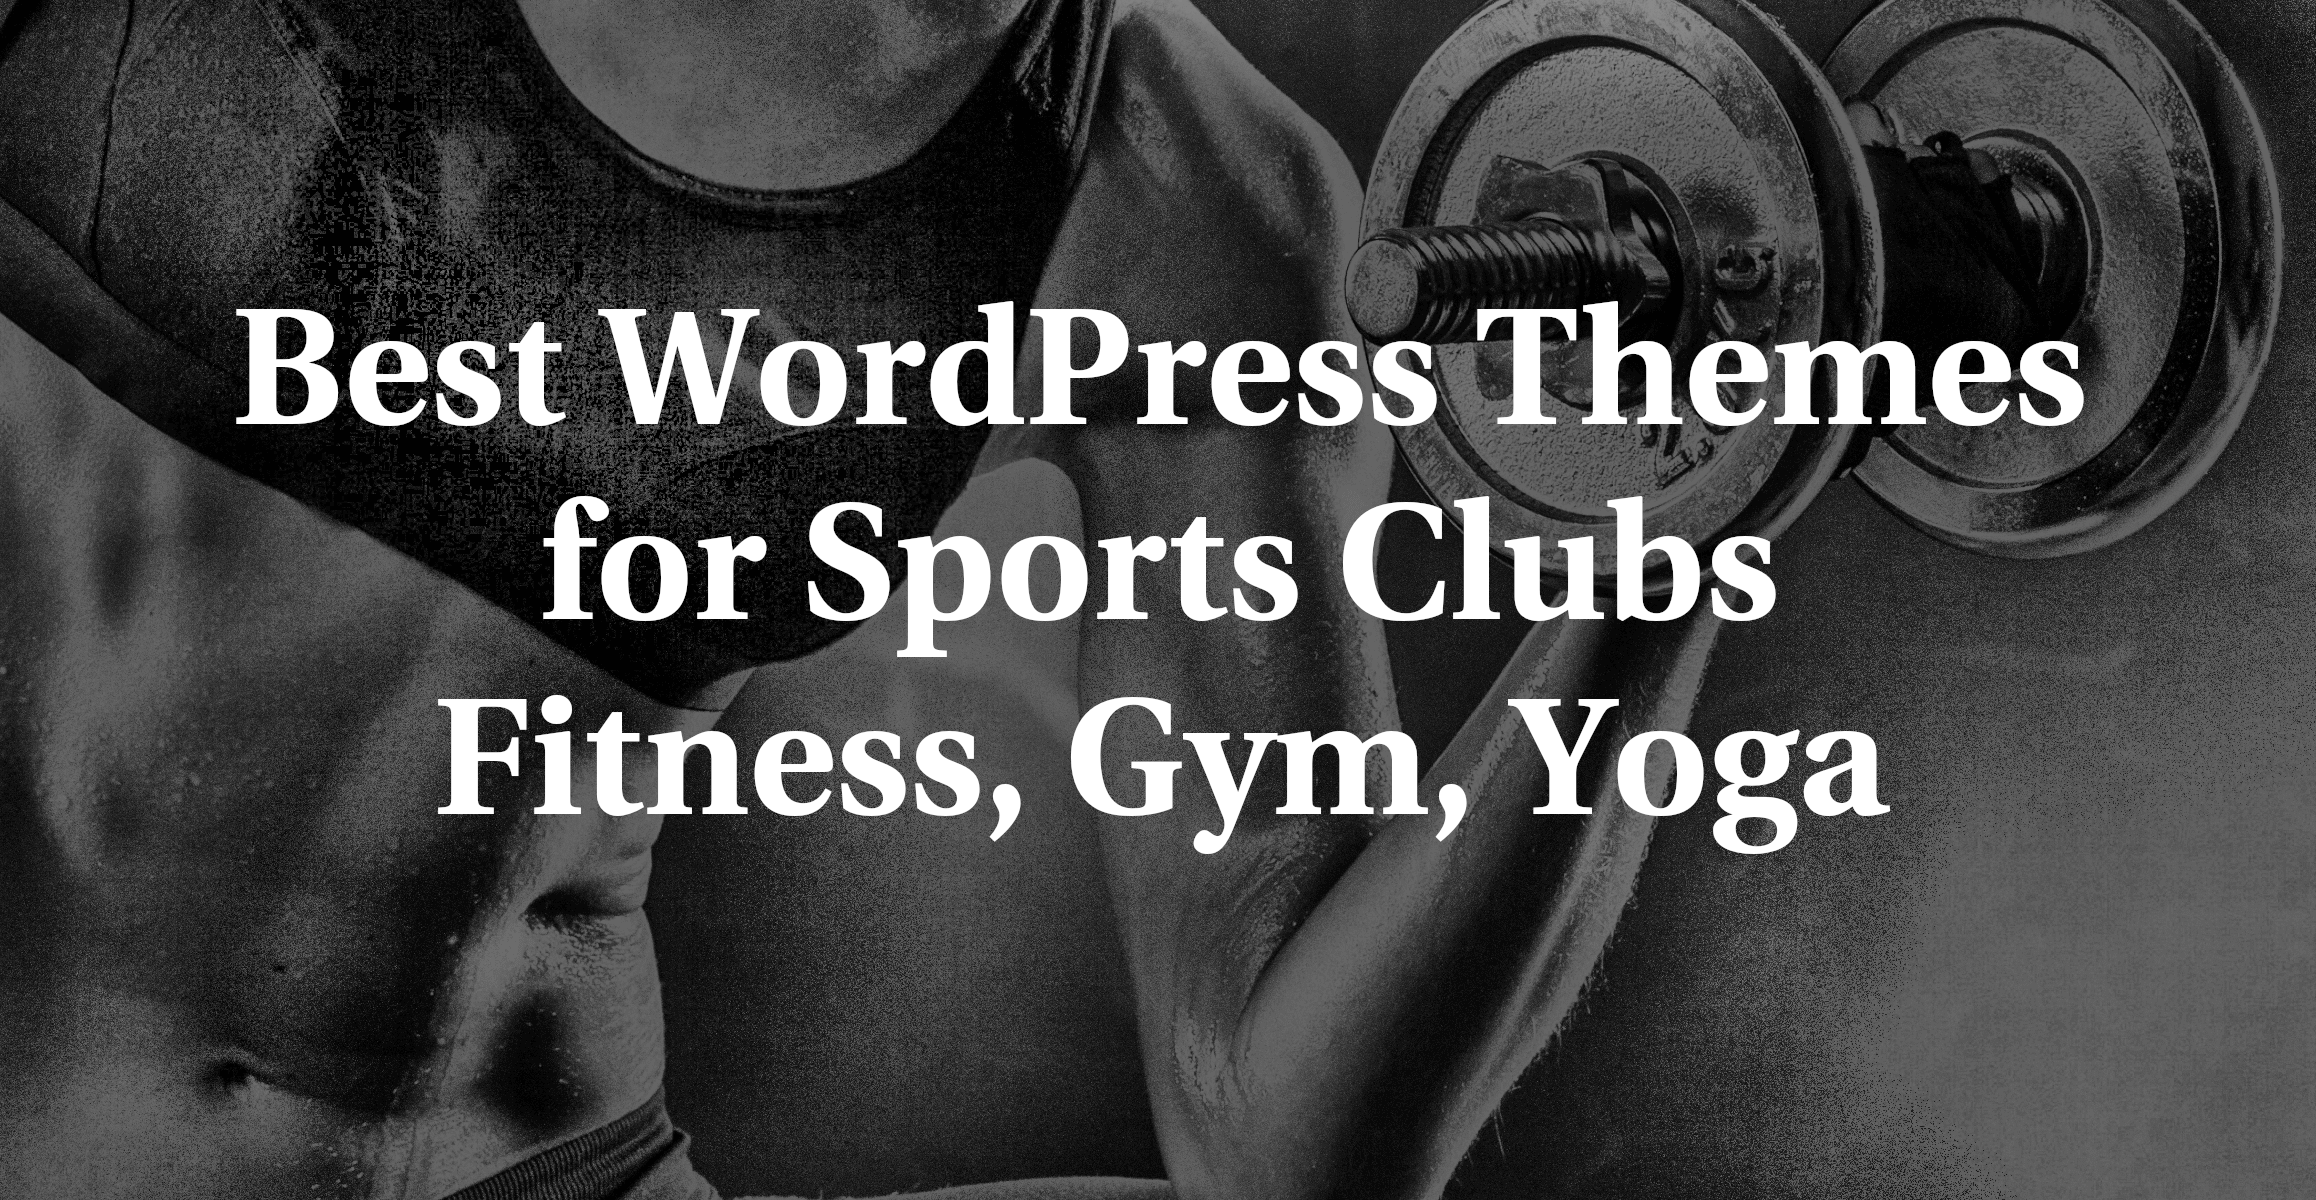 WordPress News: Best WordPress Themes for Sports Clubs Fitness, Gym, Yoga